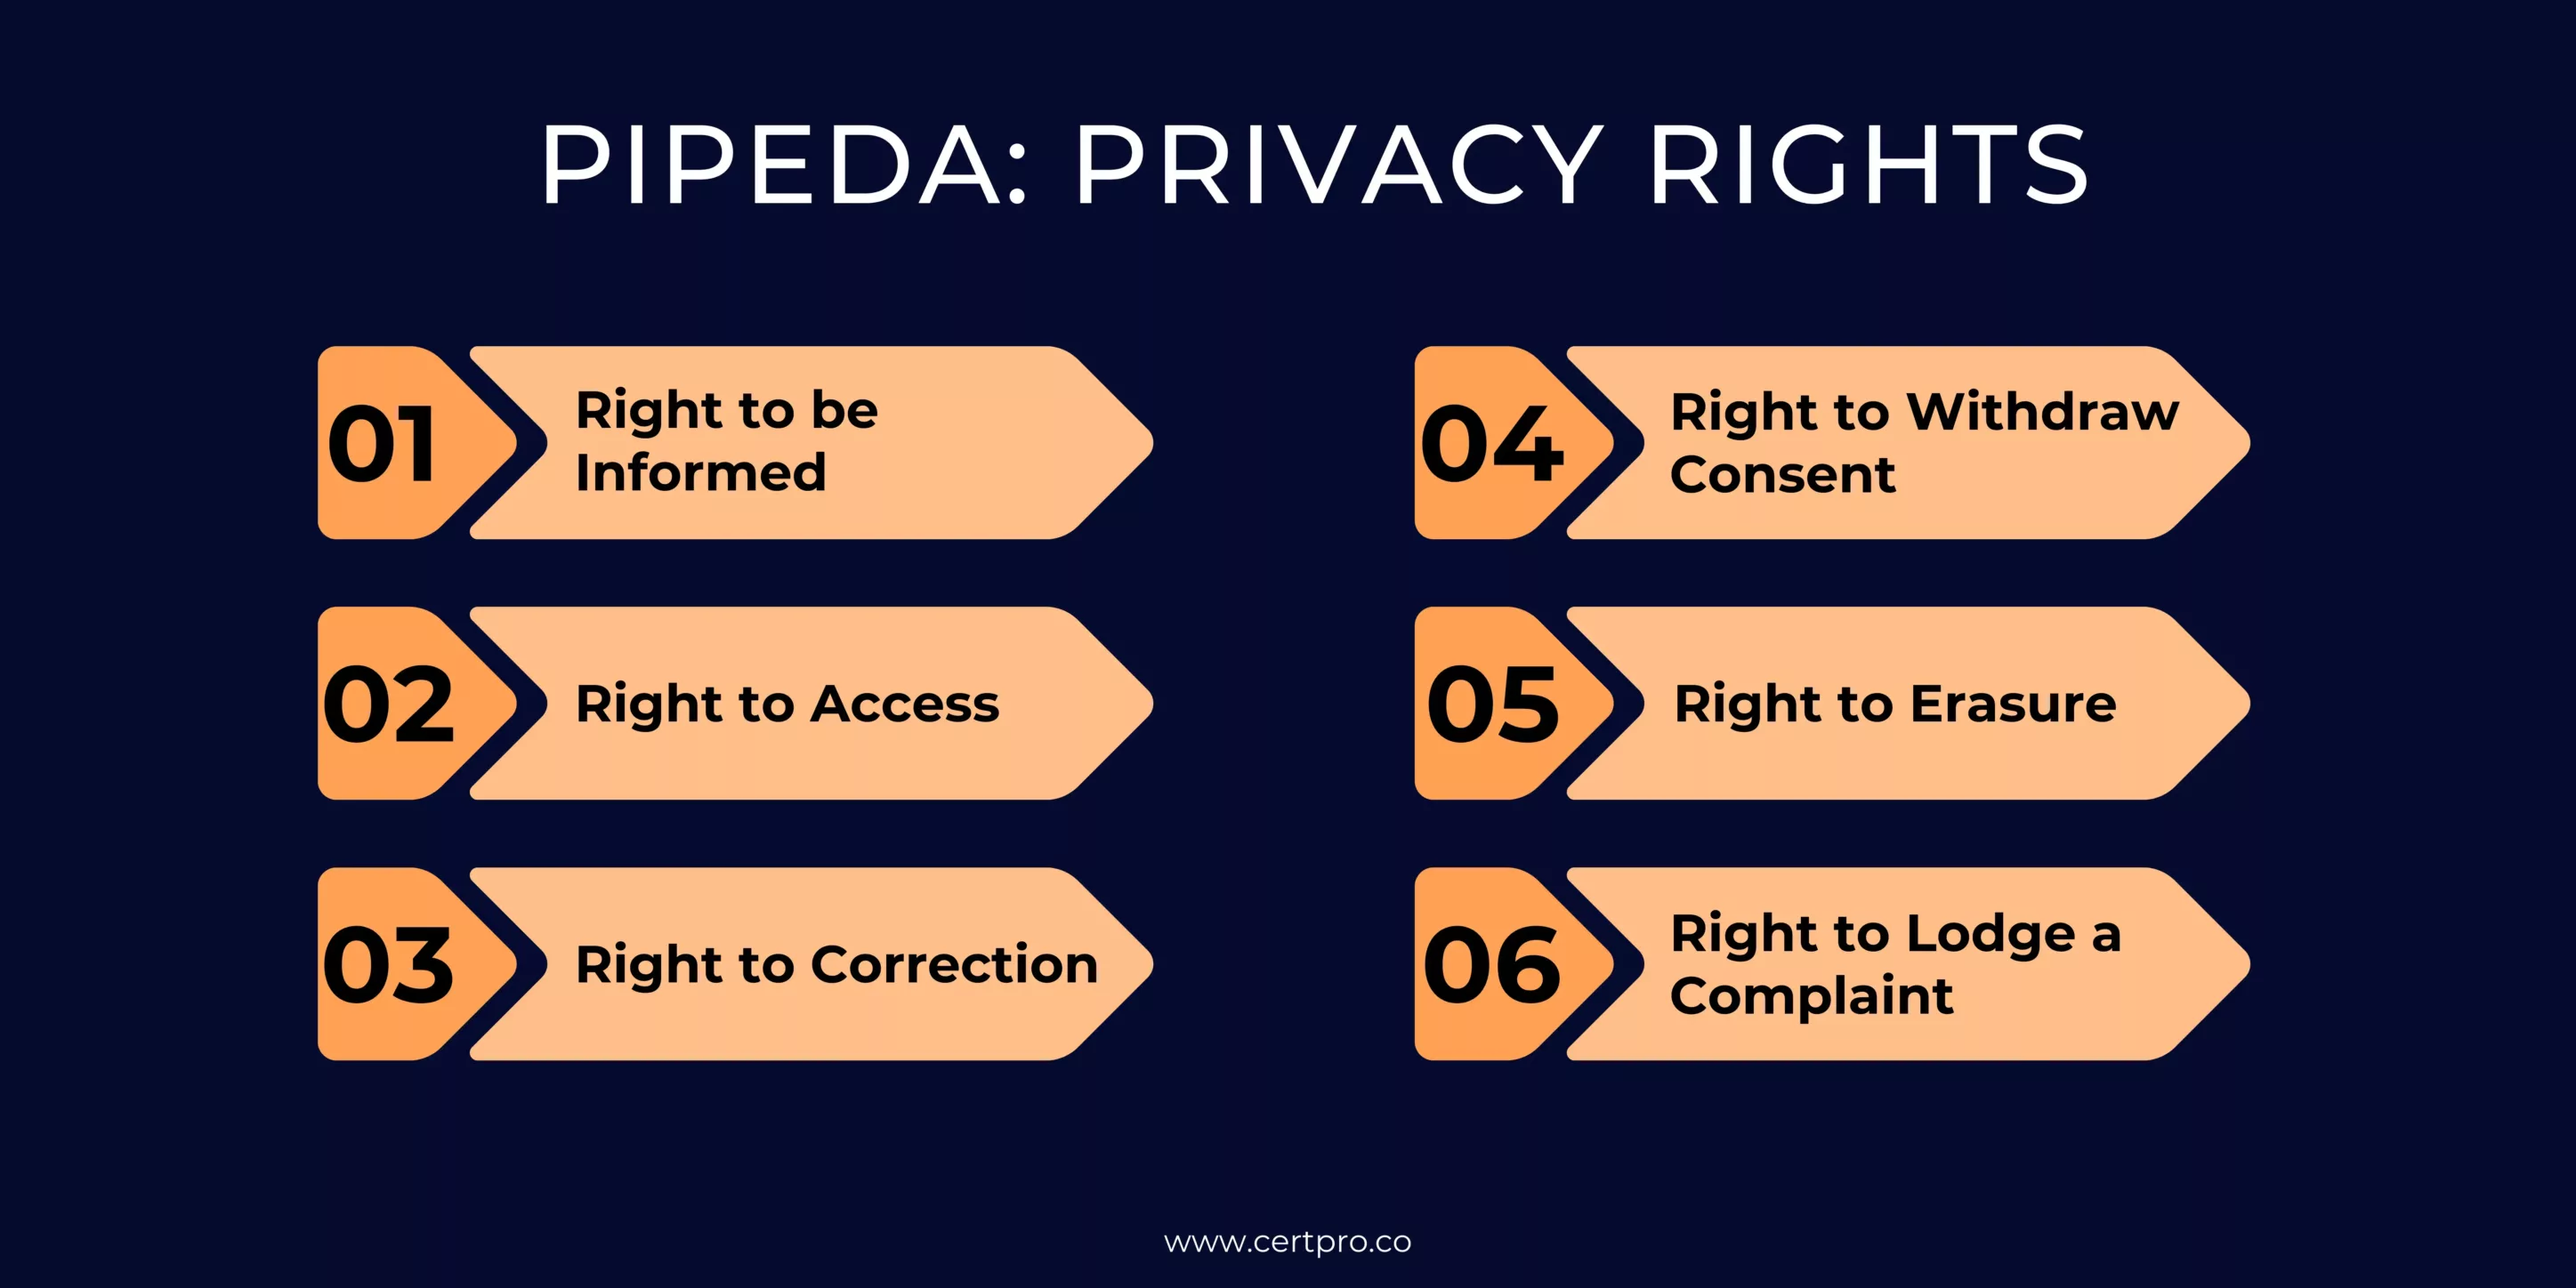 PIPEDA PRIVACY RIGHTS